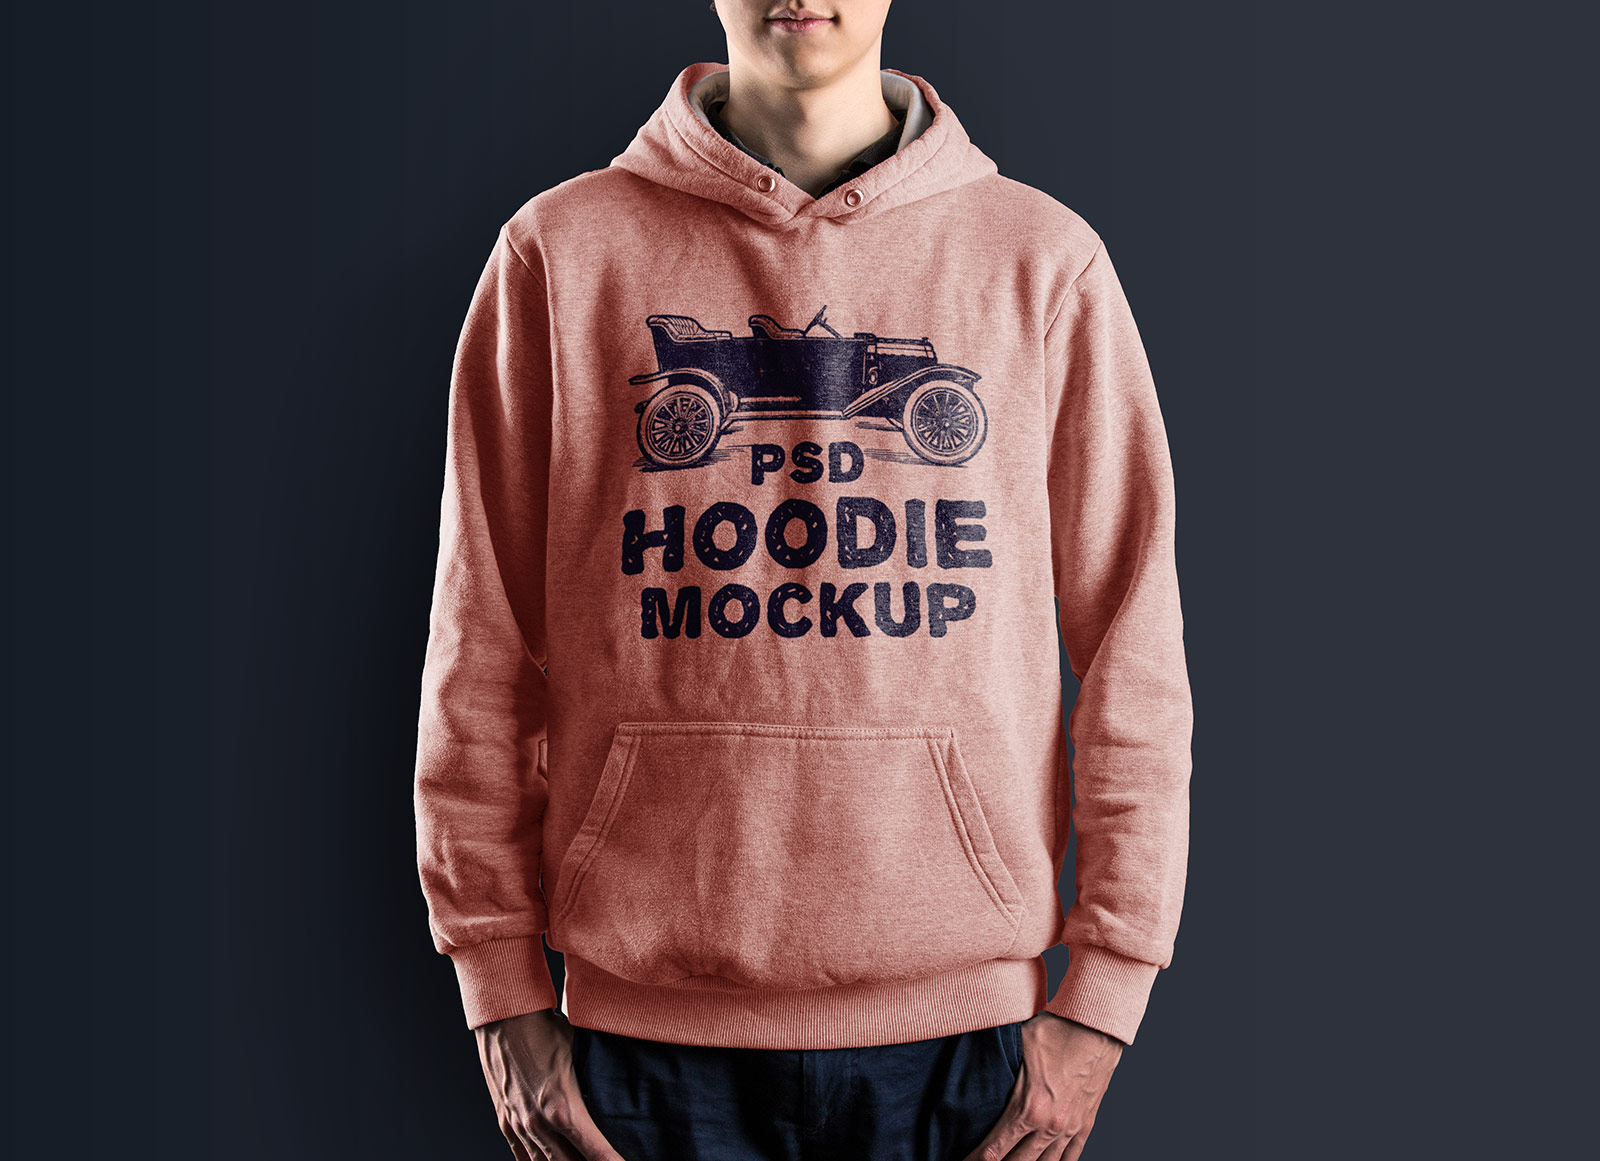 Free-Hoodie-T-Shirt-Mockup-PSD